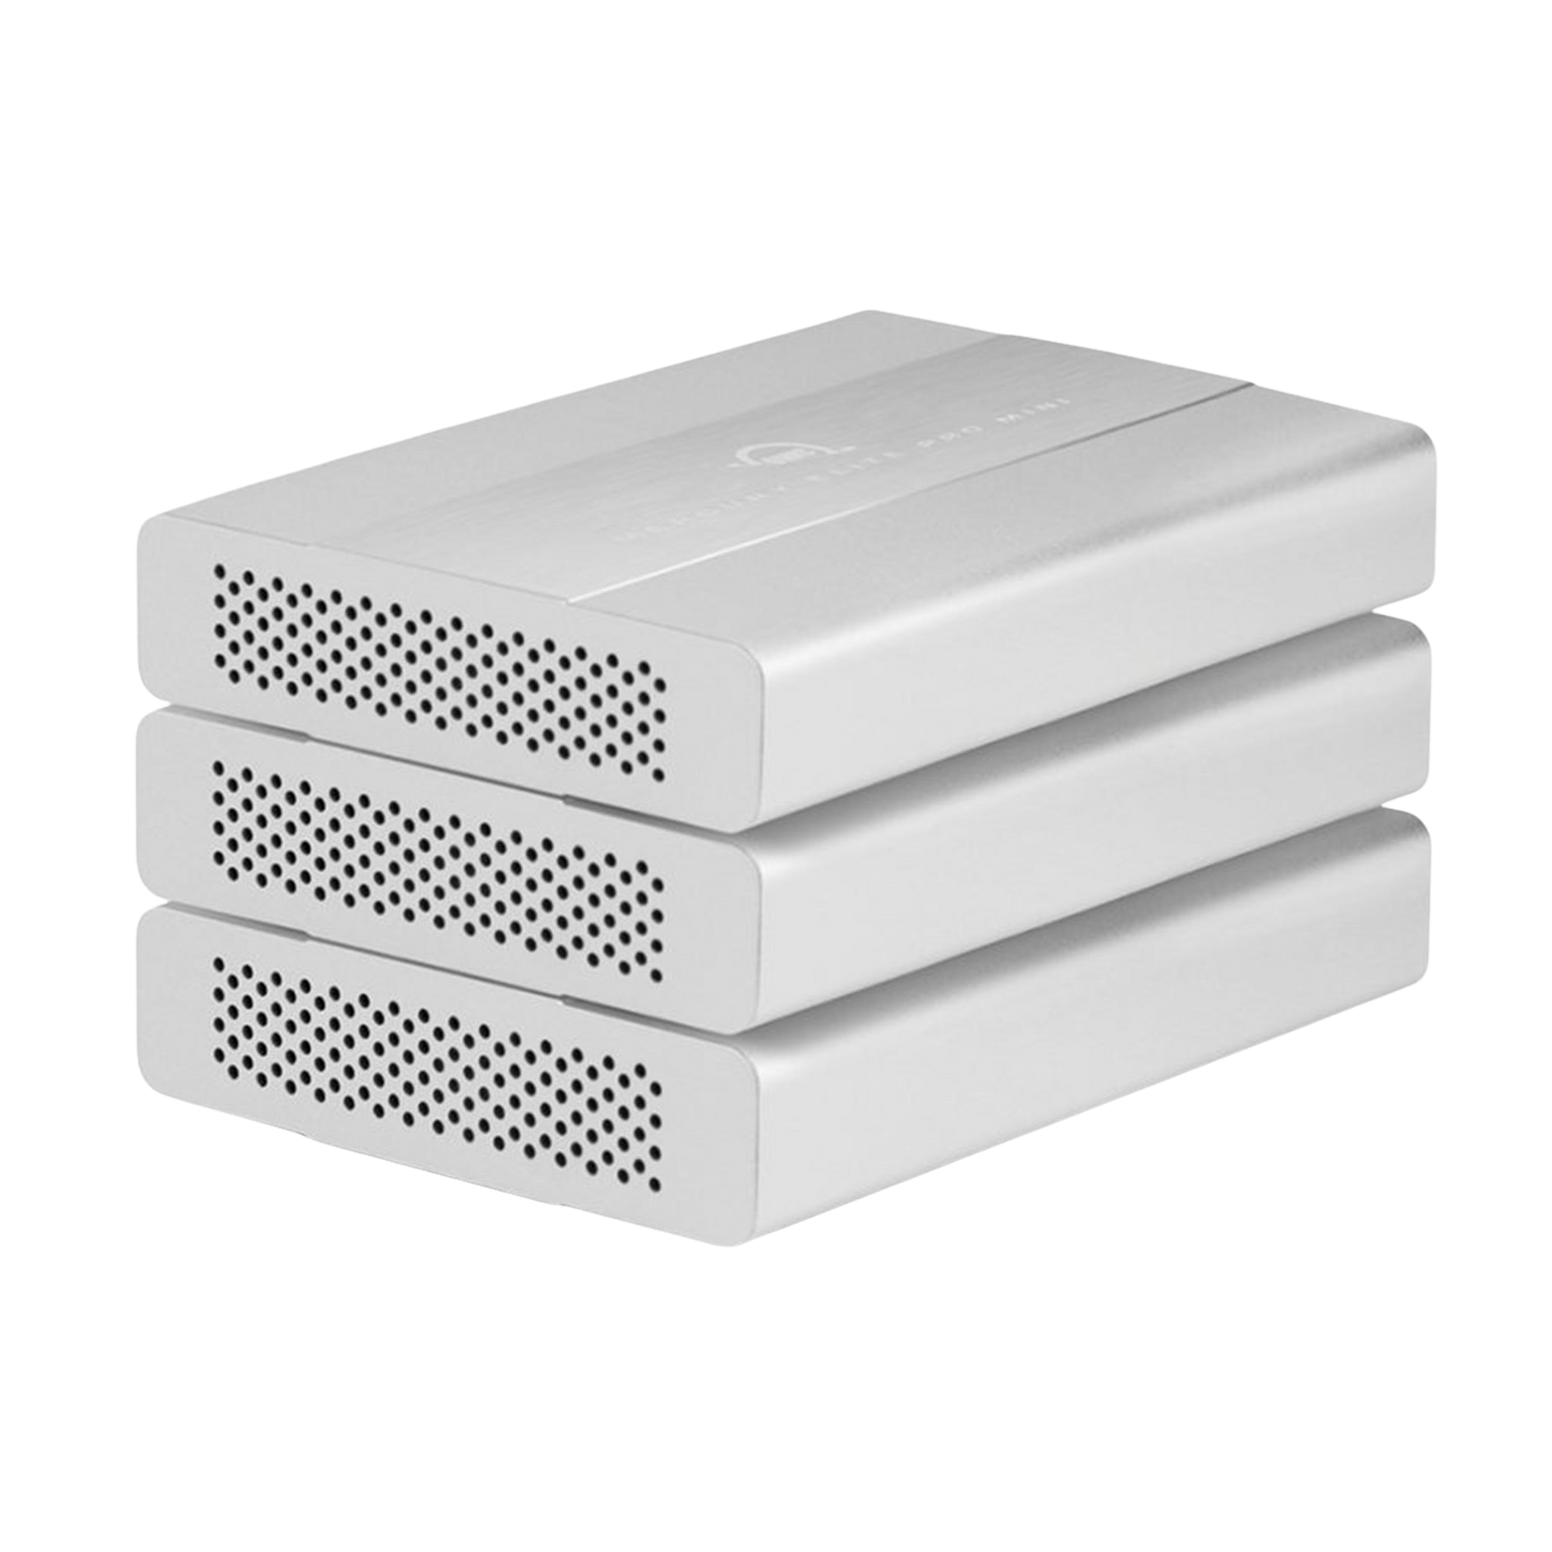 4TB OWC SSD Mercury Elite Pro mini Portable External Storage (USB 3.1 Gen 2 & eSATA) - Discontinued